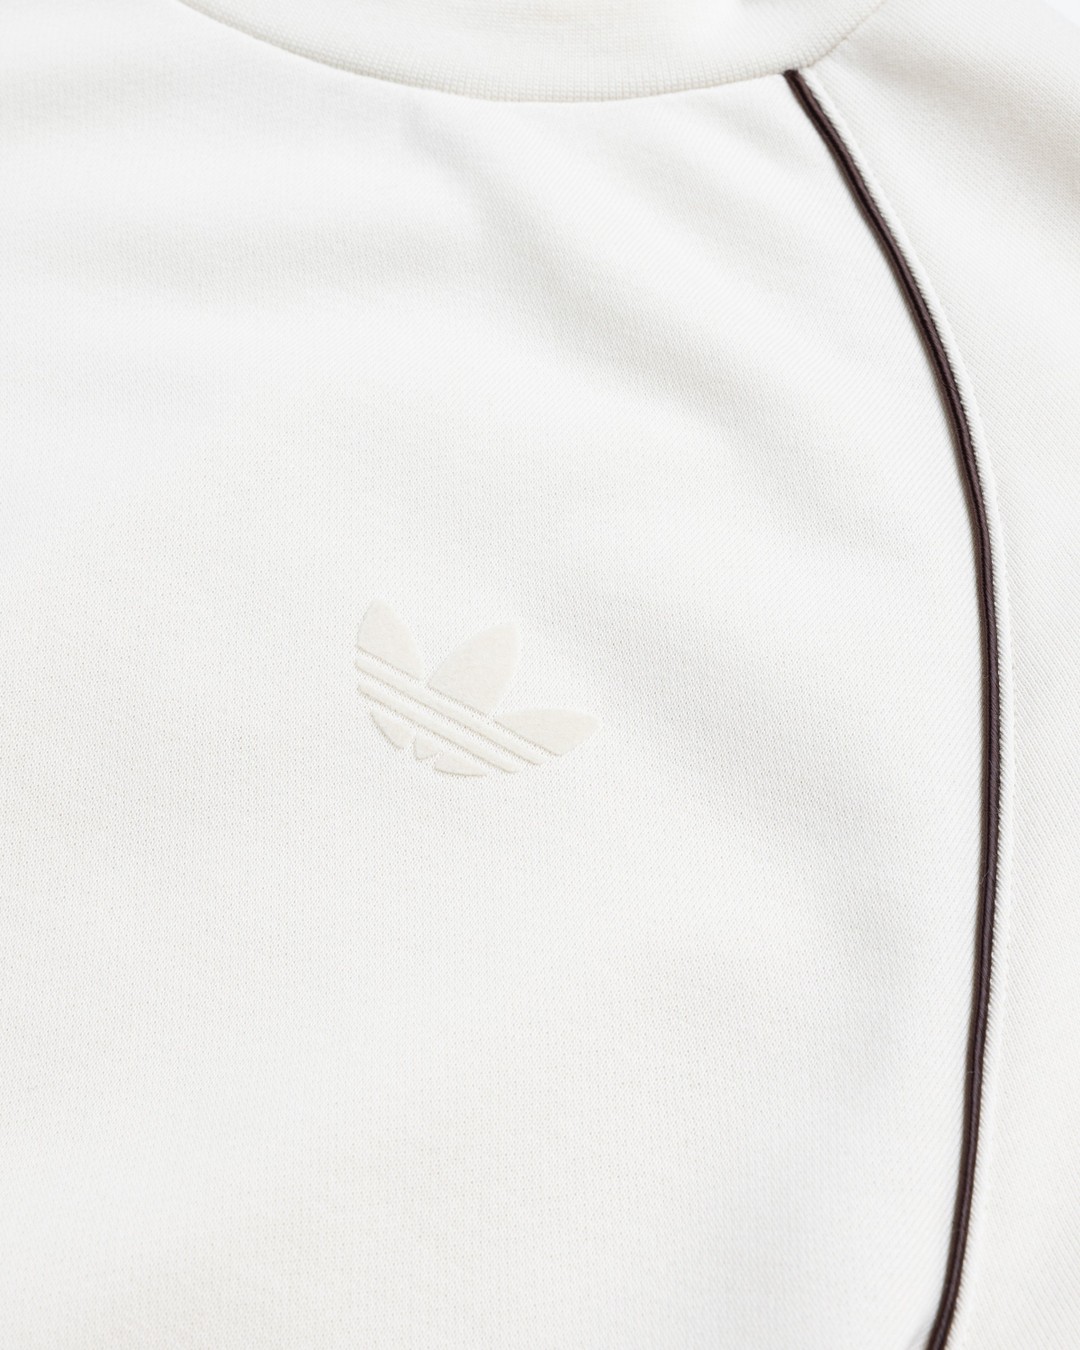 Adidas x Wales Bonner – Crewneck Sweater Wonder White - Knitwear - Beige - Image 5